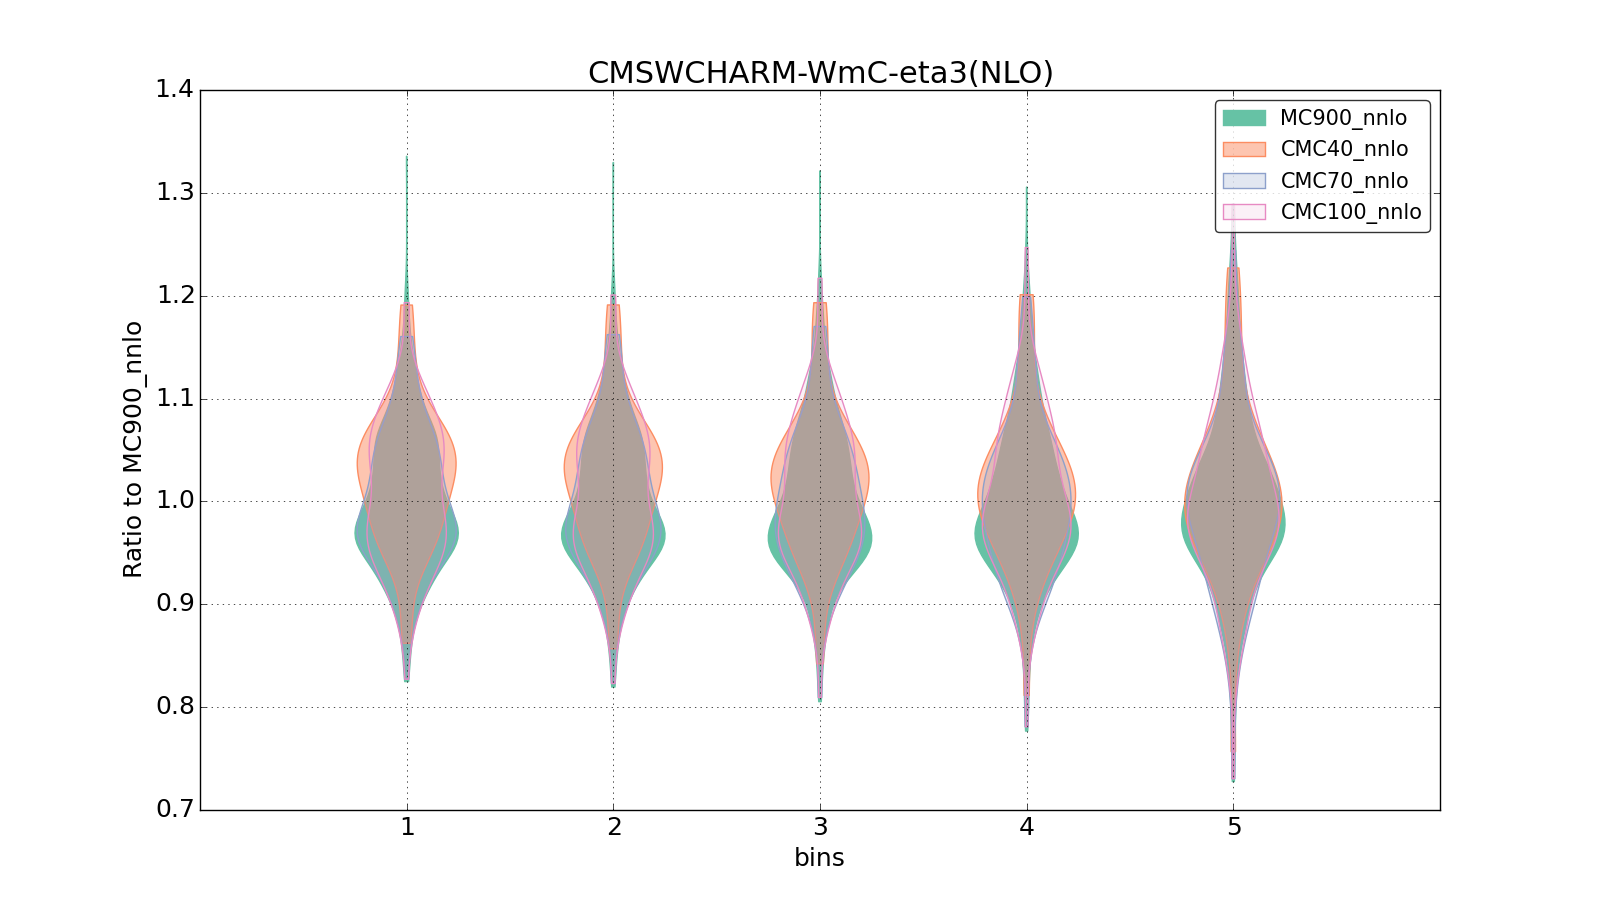 figure plots/CMCpheno/group_0_violinplot_CMSWCHARM-WmC-eta3(NLO).png